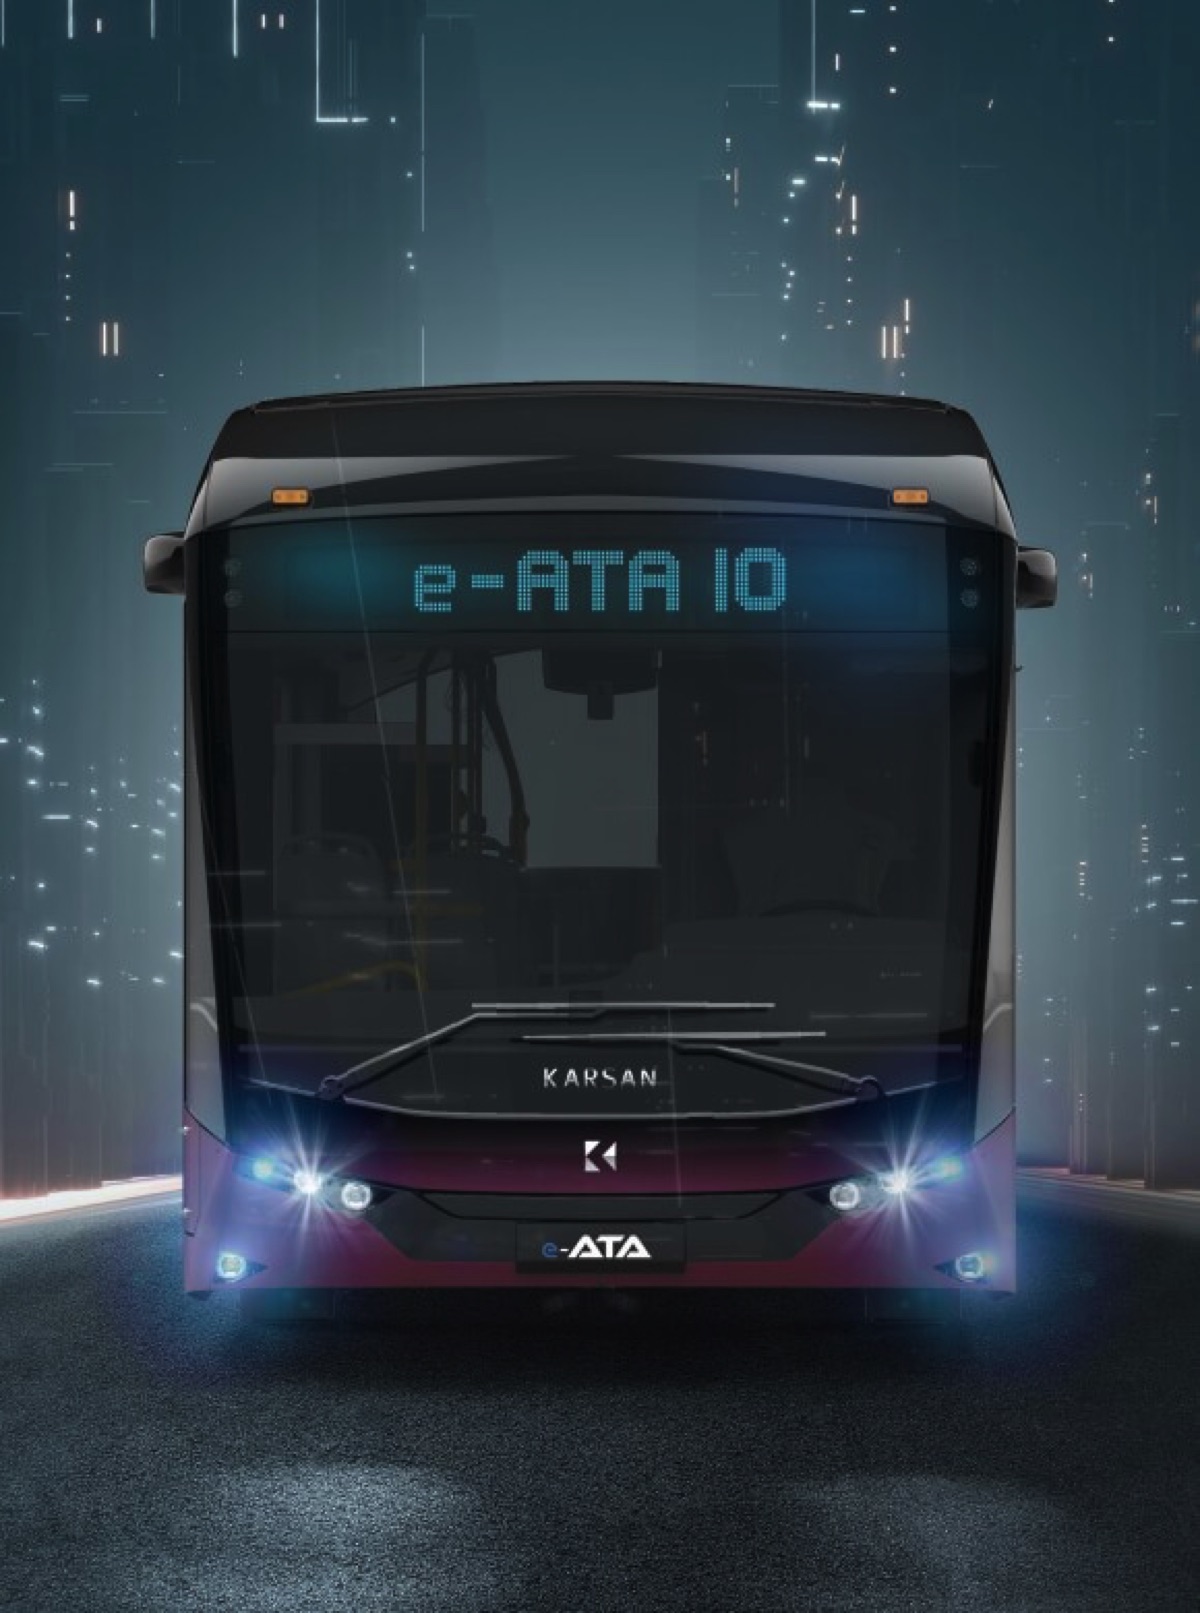 Bursa’nın ilk elektrikli otobüsleri Karsan e-ATA 2